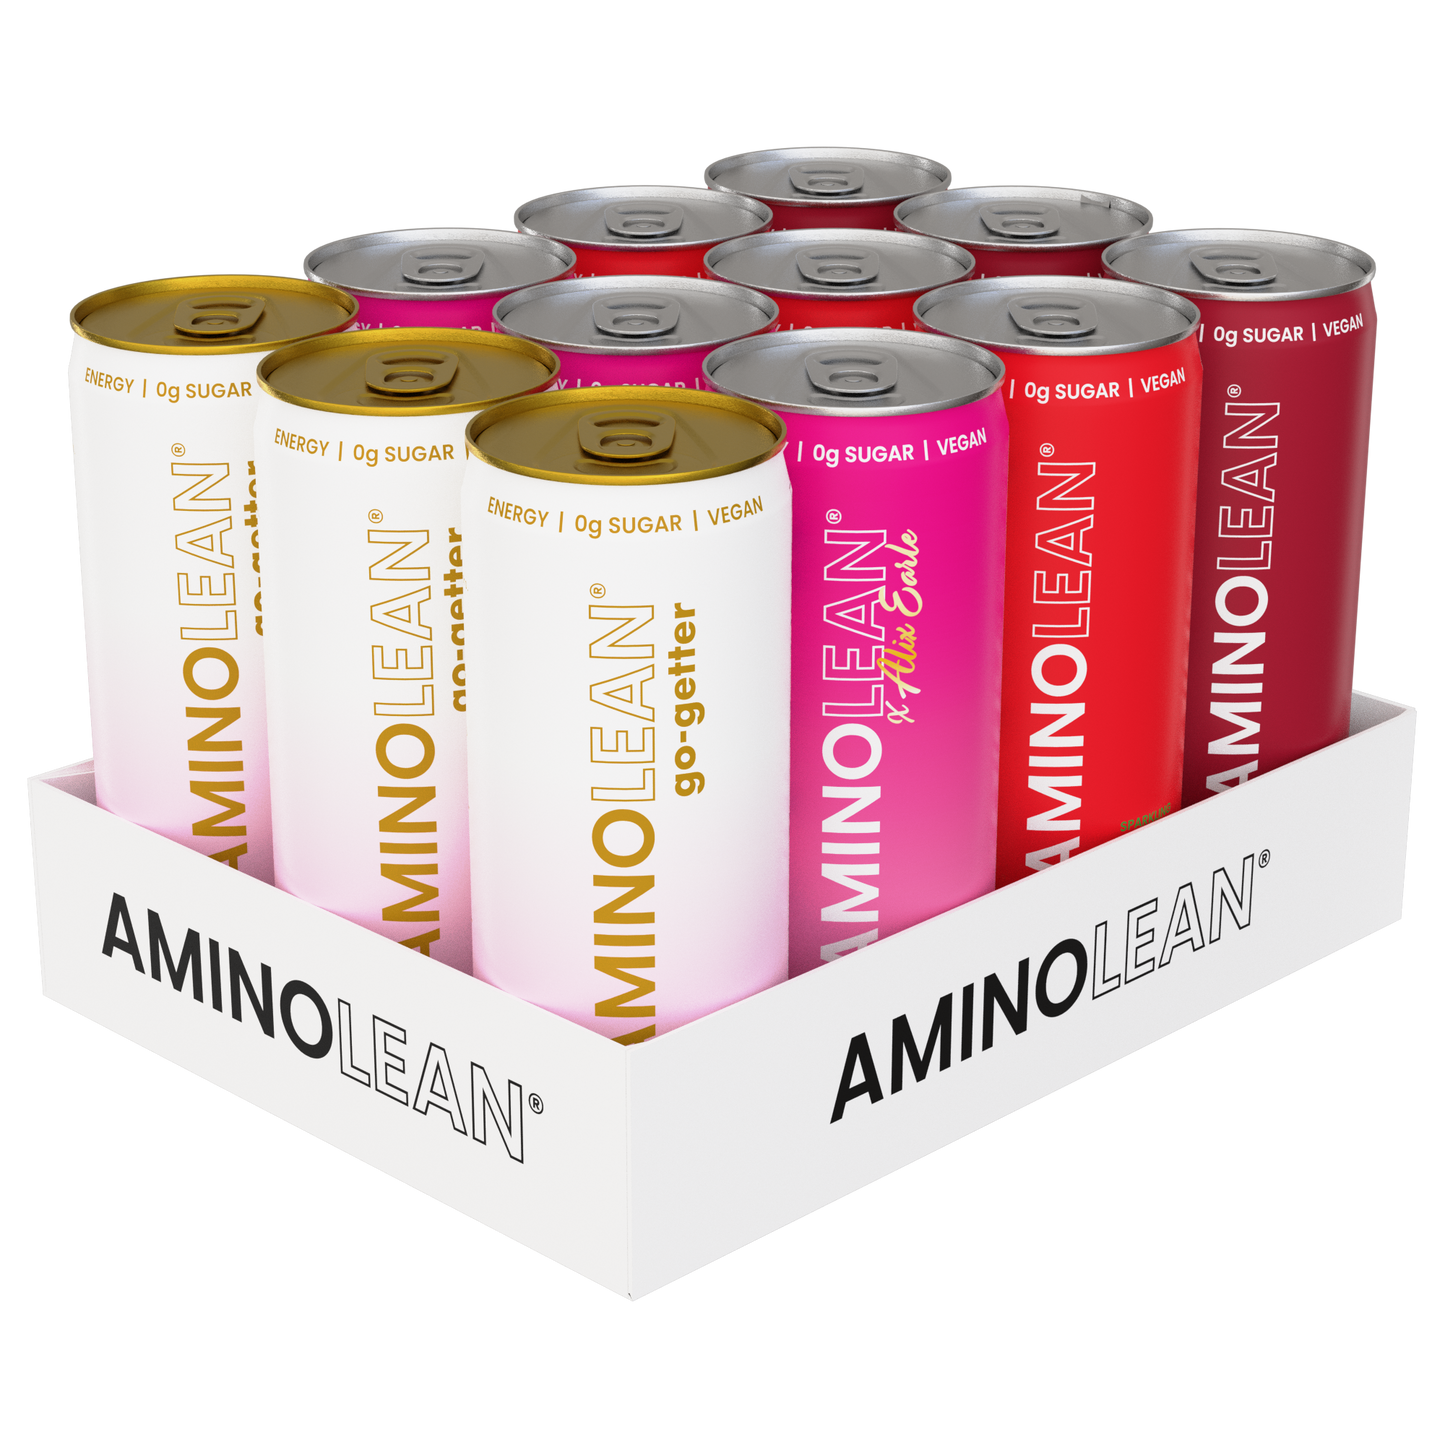 AminoLean Energy Drink - GO-GETTER Variety Pack